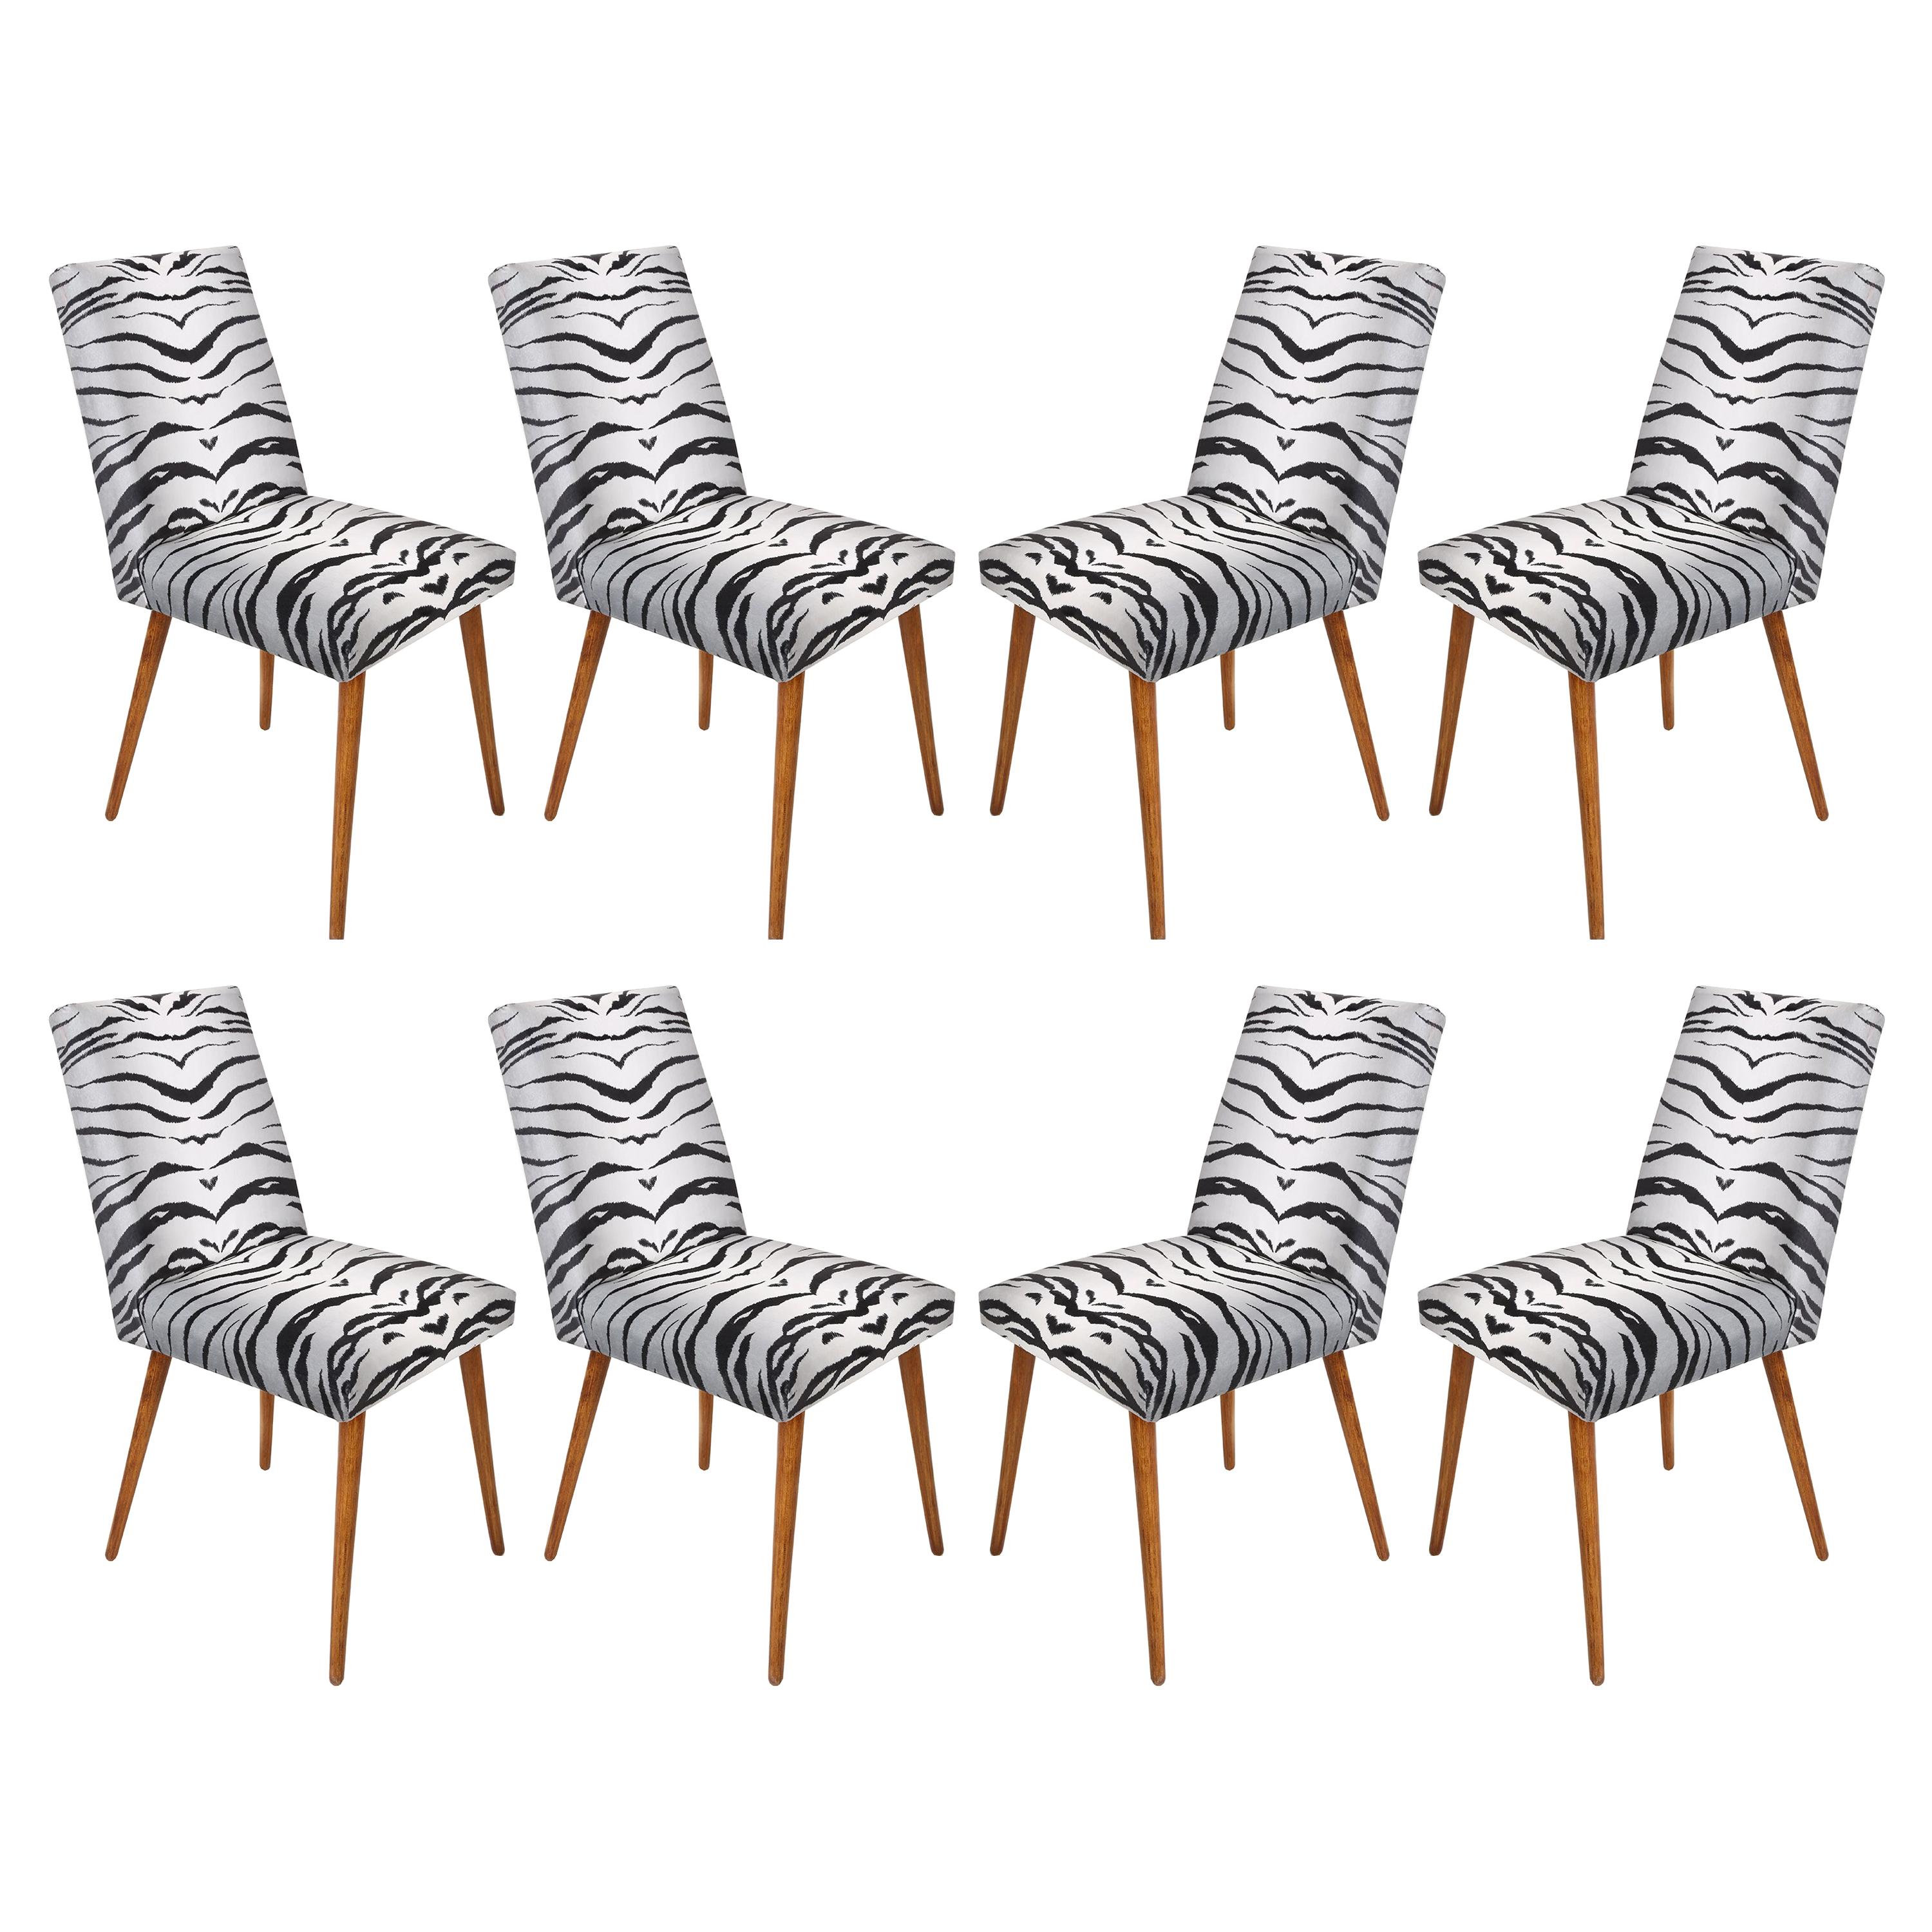 Set of Eight 20th Century Black and White Zebra Velvet Chairs, Europe, 1960s For Sale